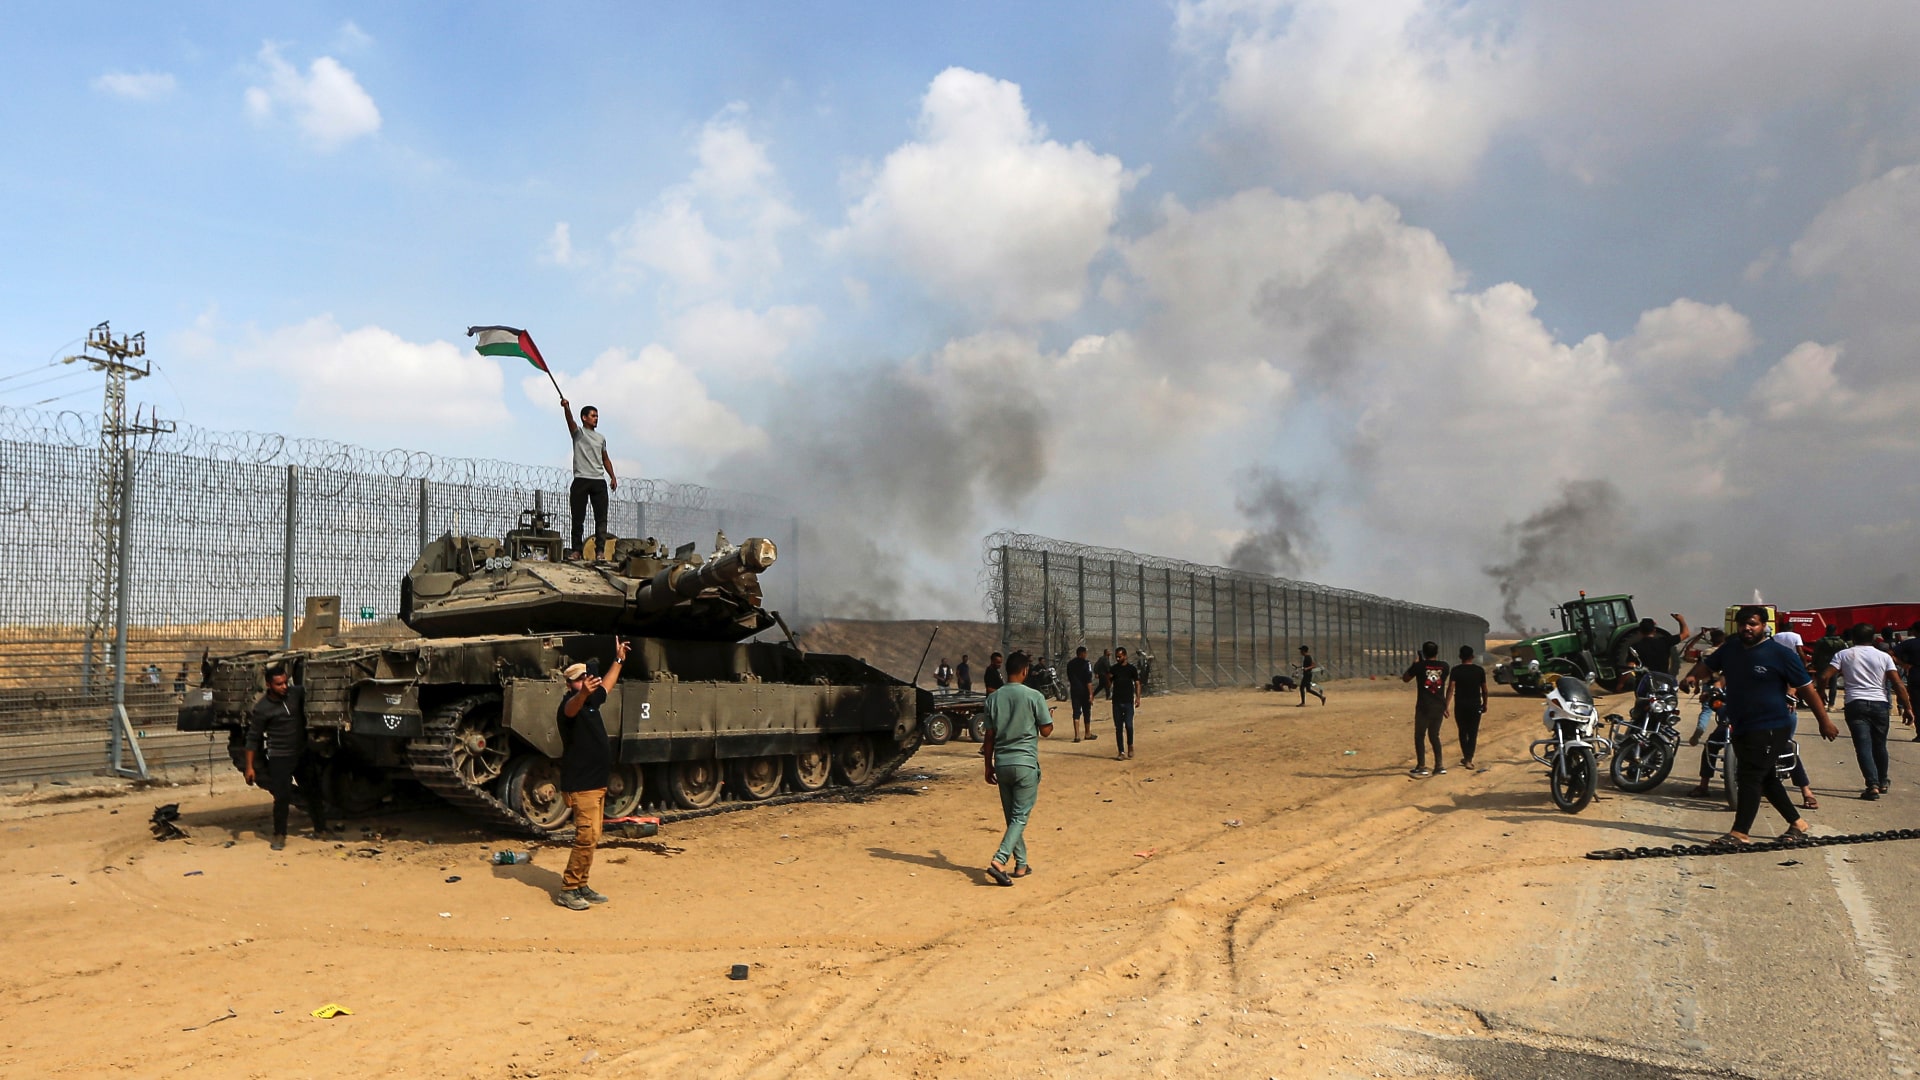 Hamas útok na Izrael. Palestínčania obsadili tank